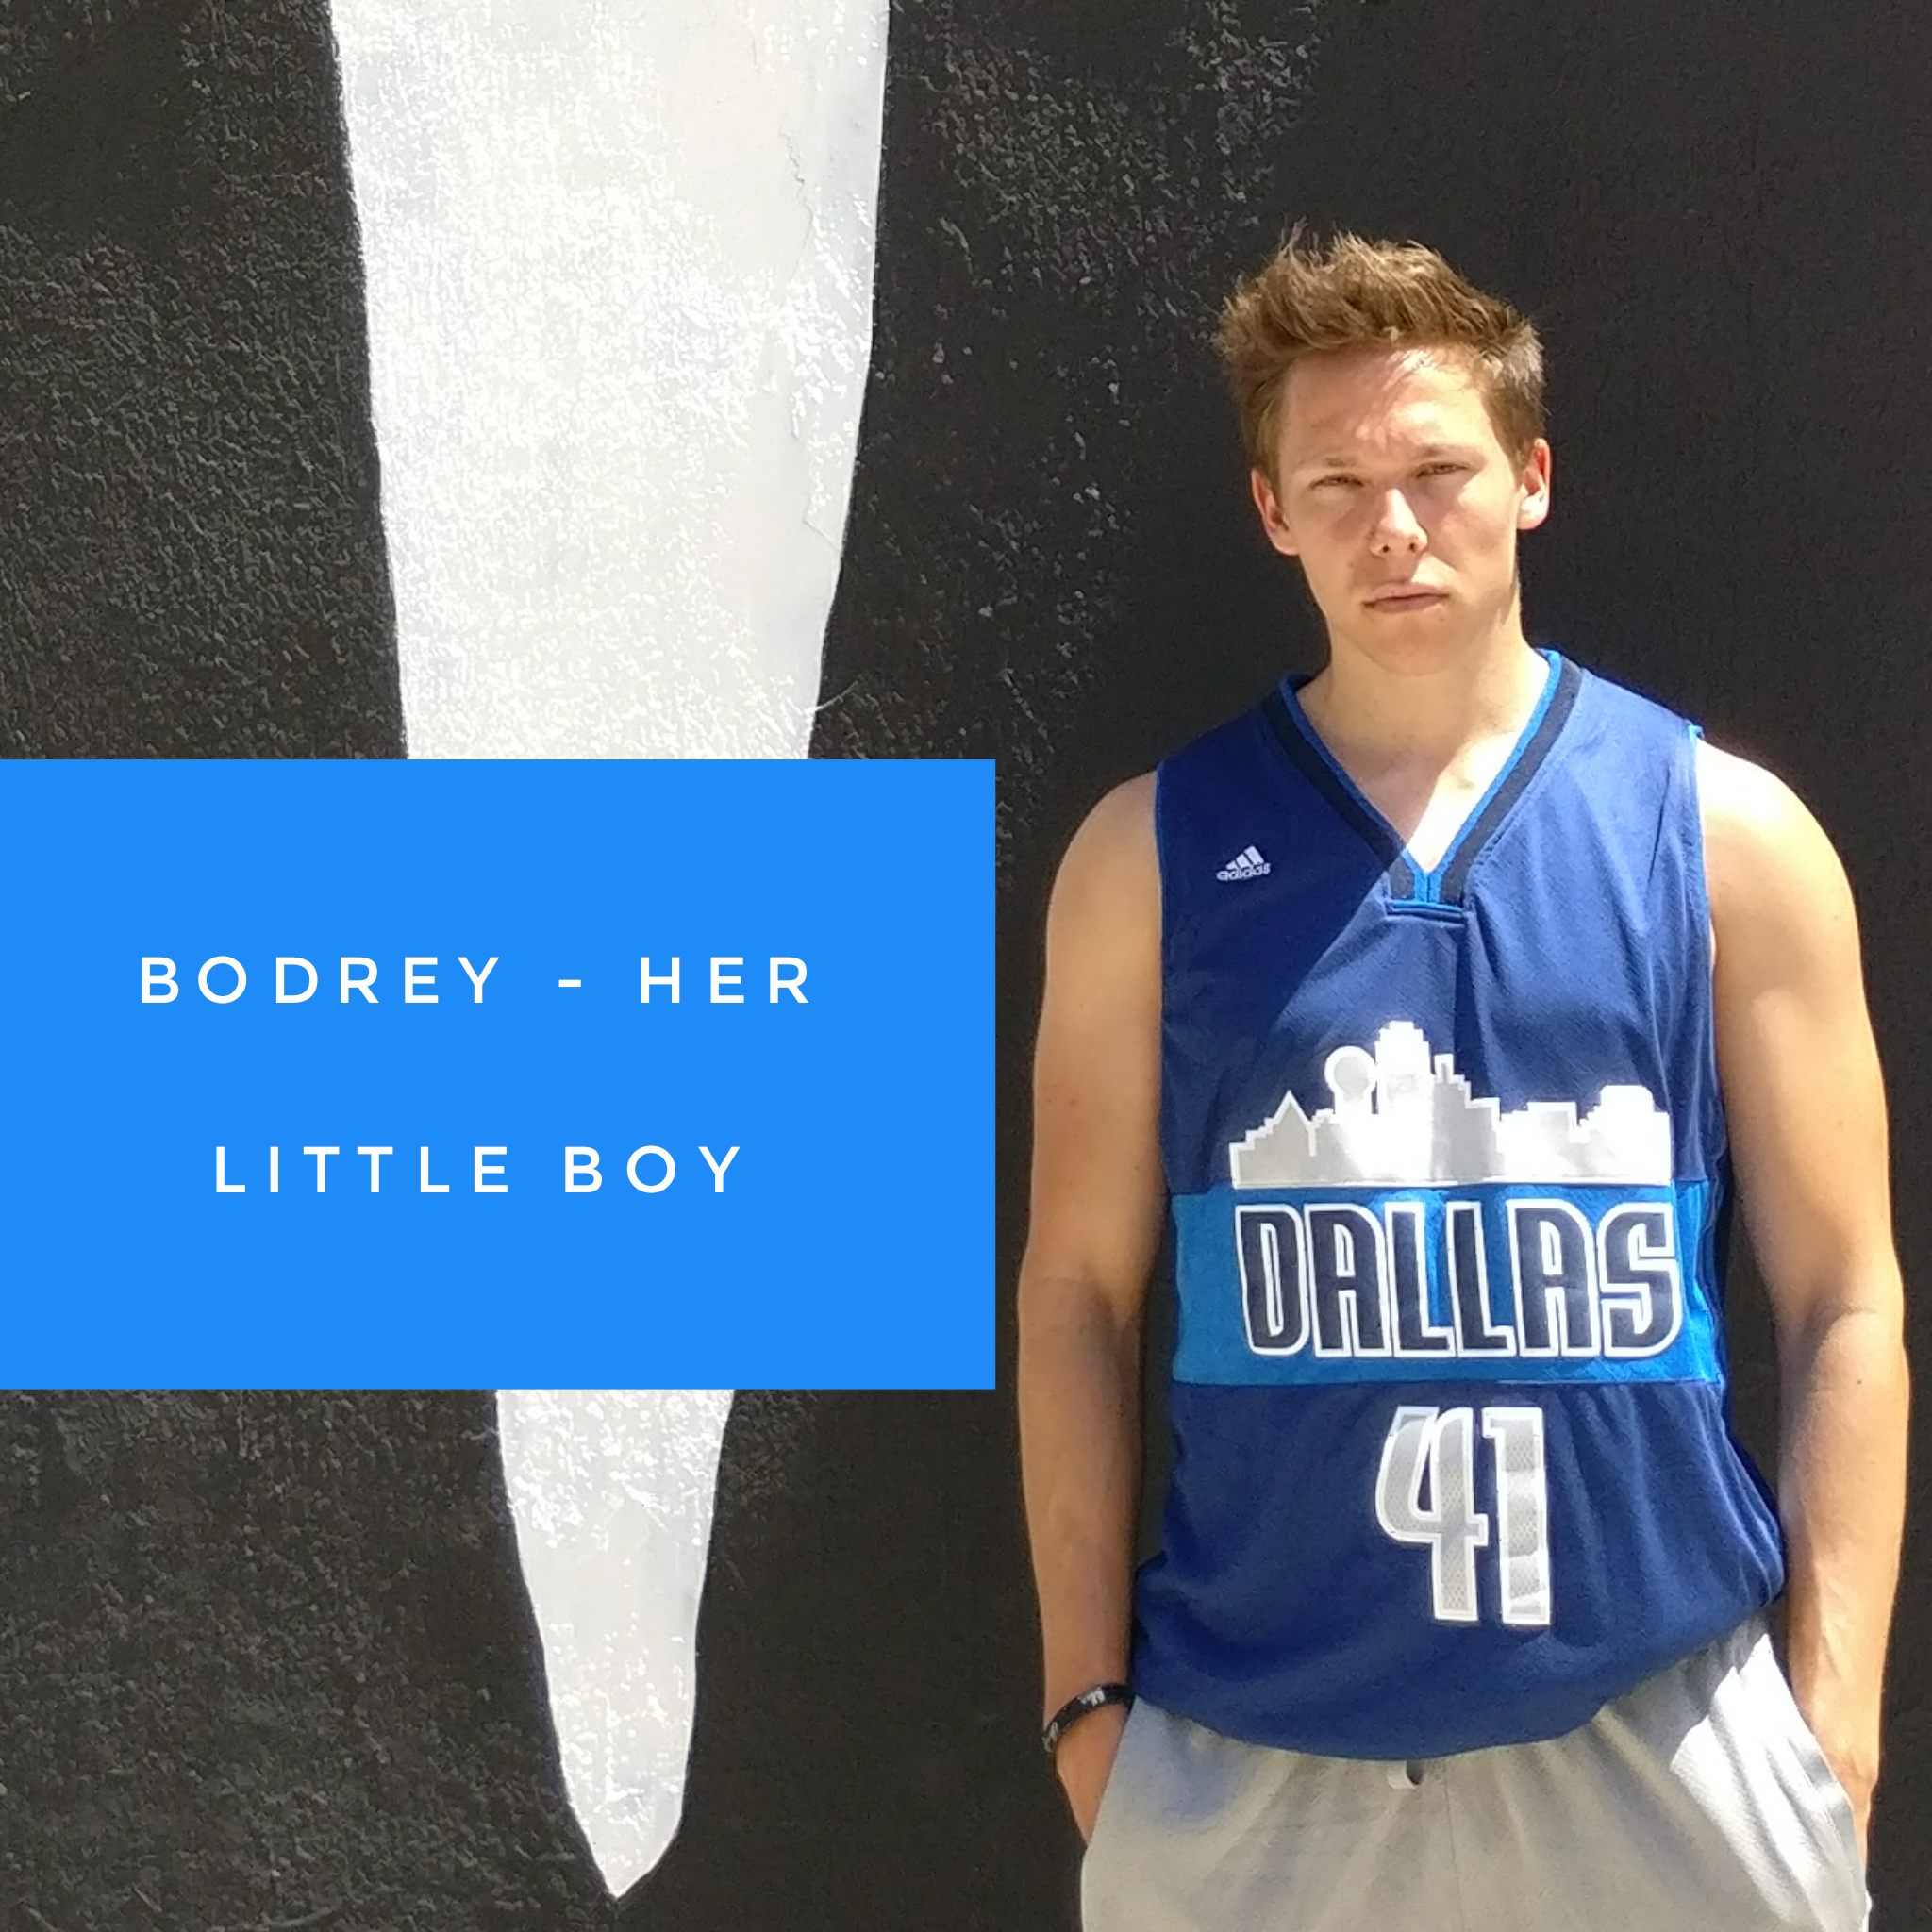 Bodrey – her little boy